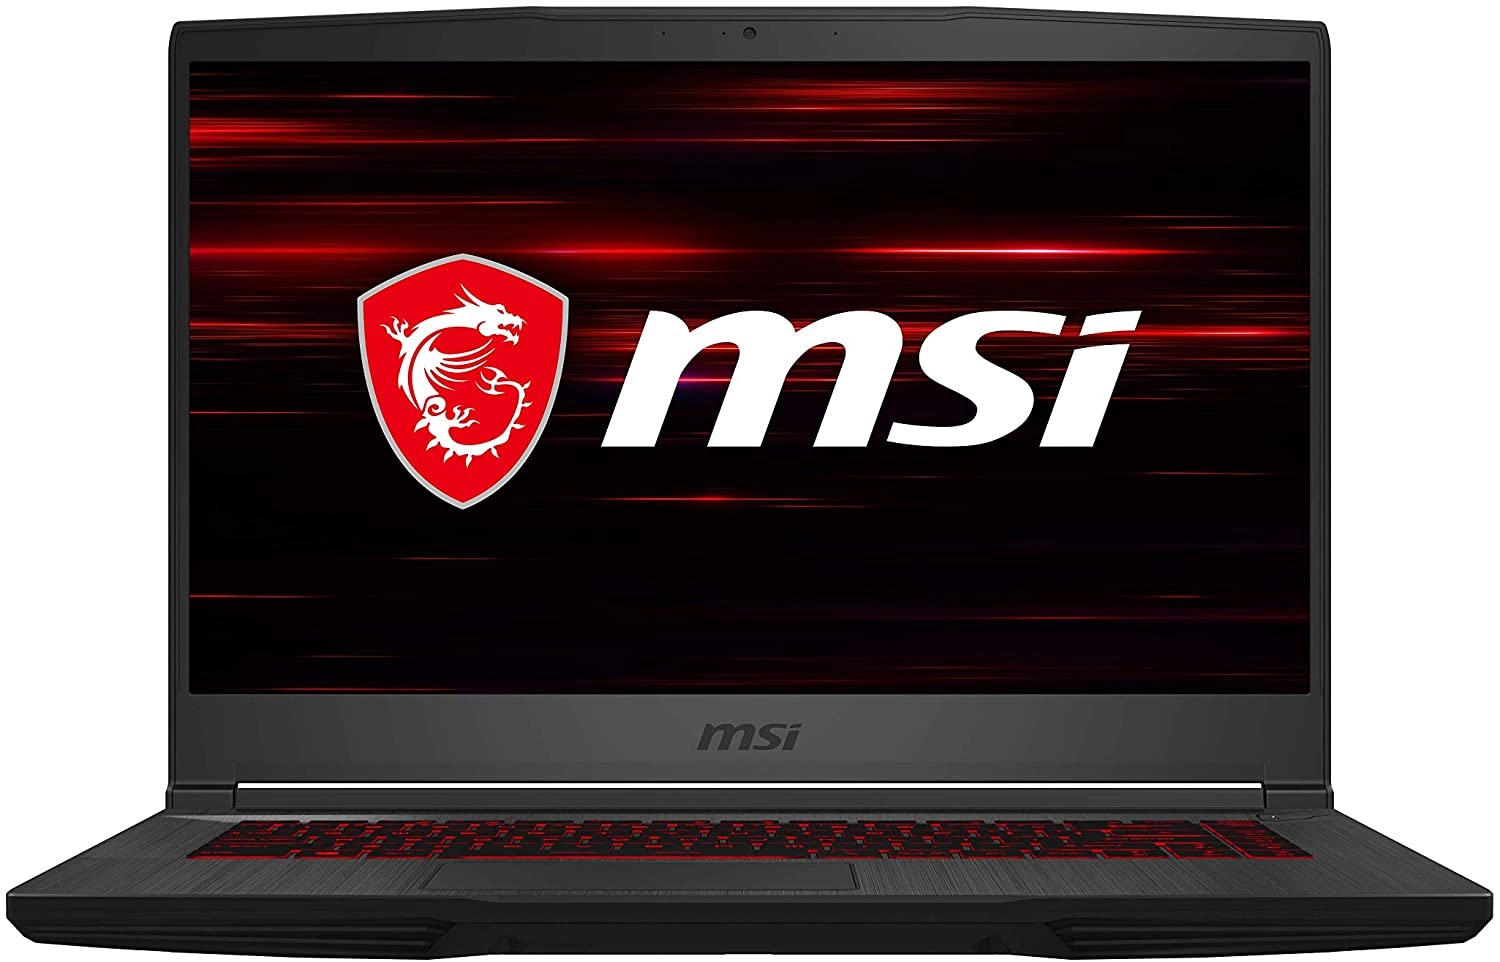 MSI GF65 THIN 9SD-004 laptop image